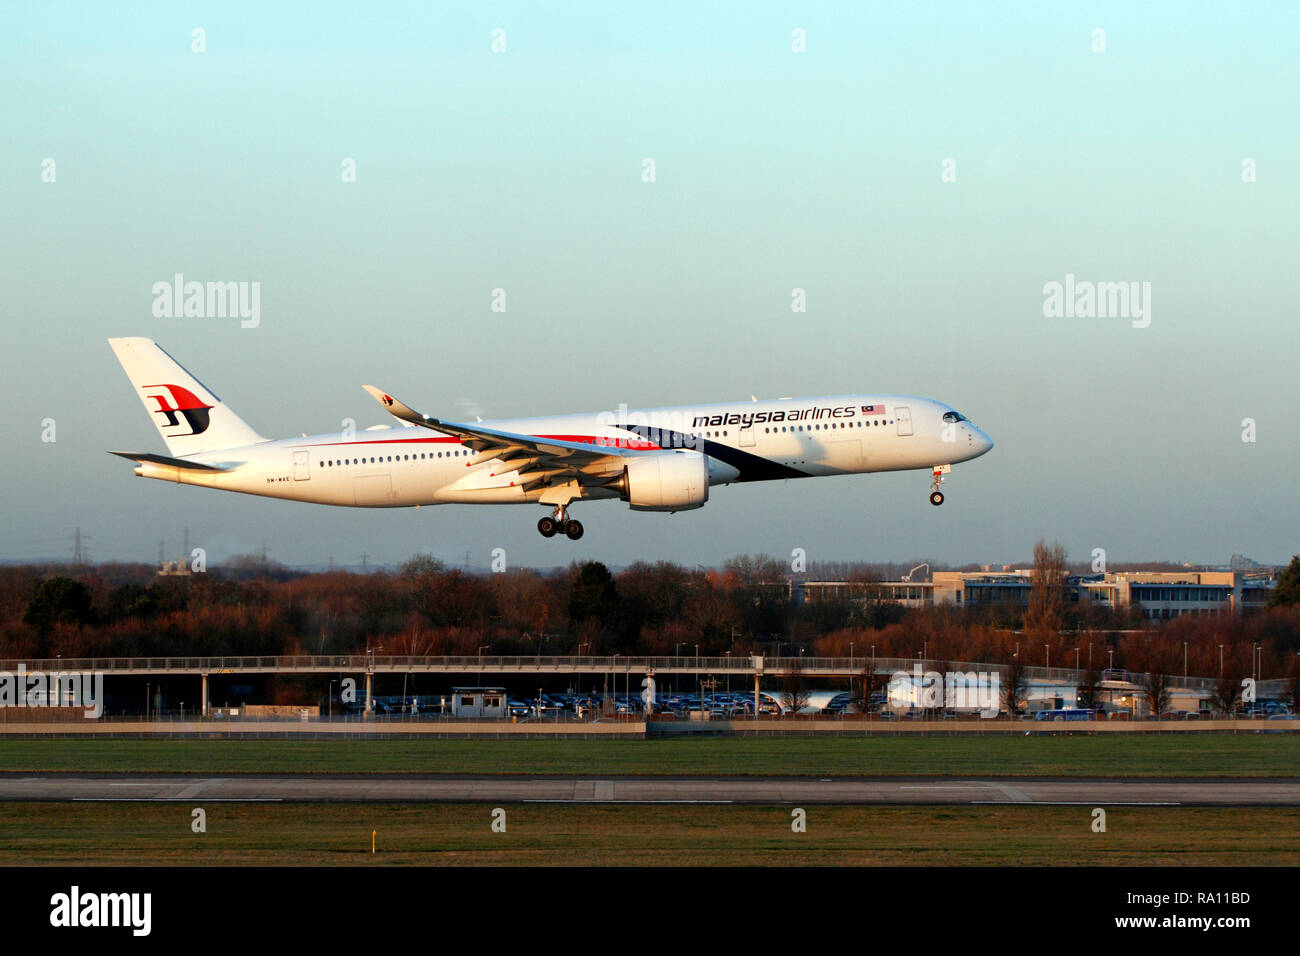 Malaysia Airlines Airbus A350-900, 9 M-MAE Landung am Flughafen Heathrow, Flughafen, London UK. Stockfoto